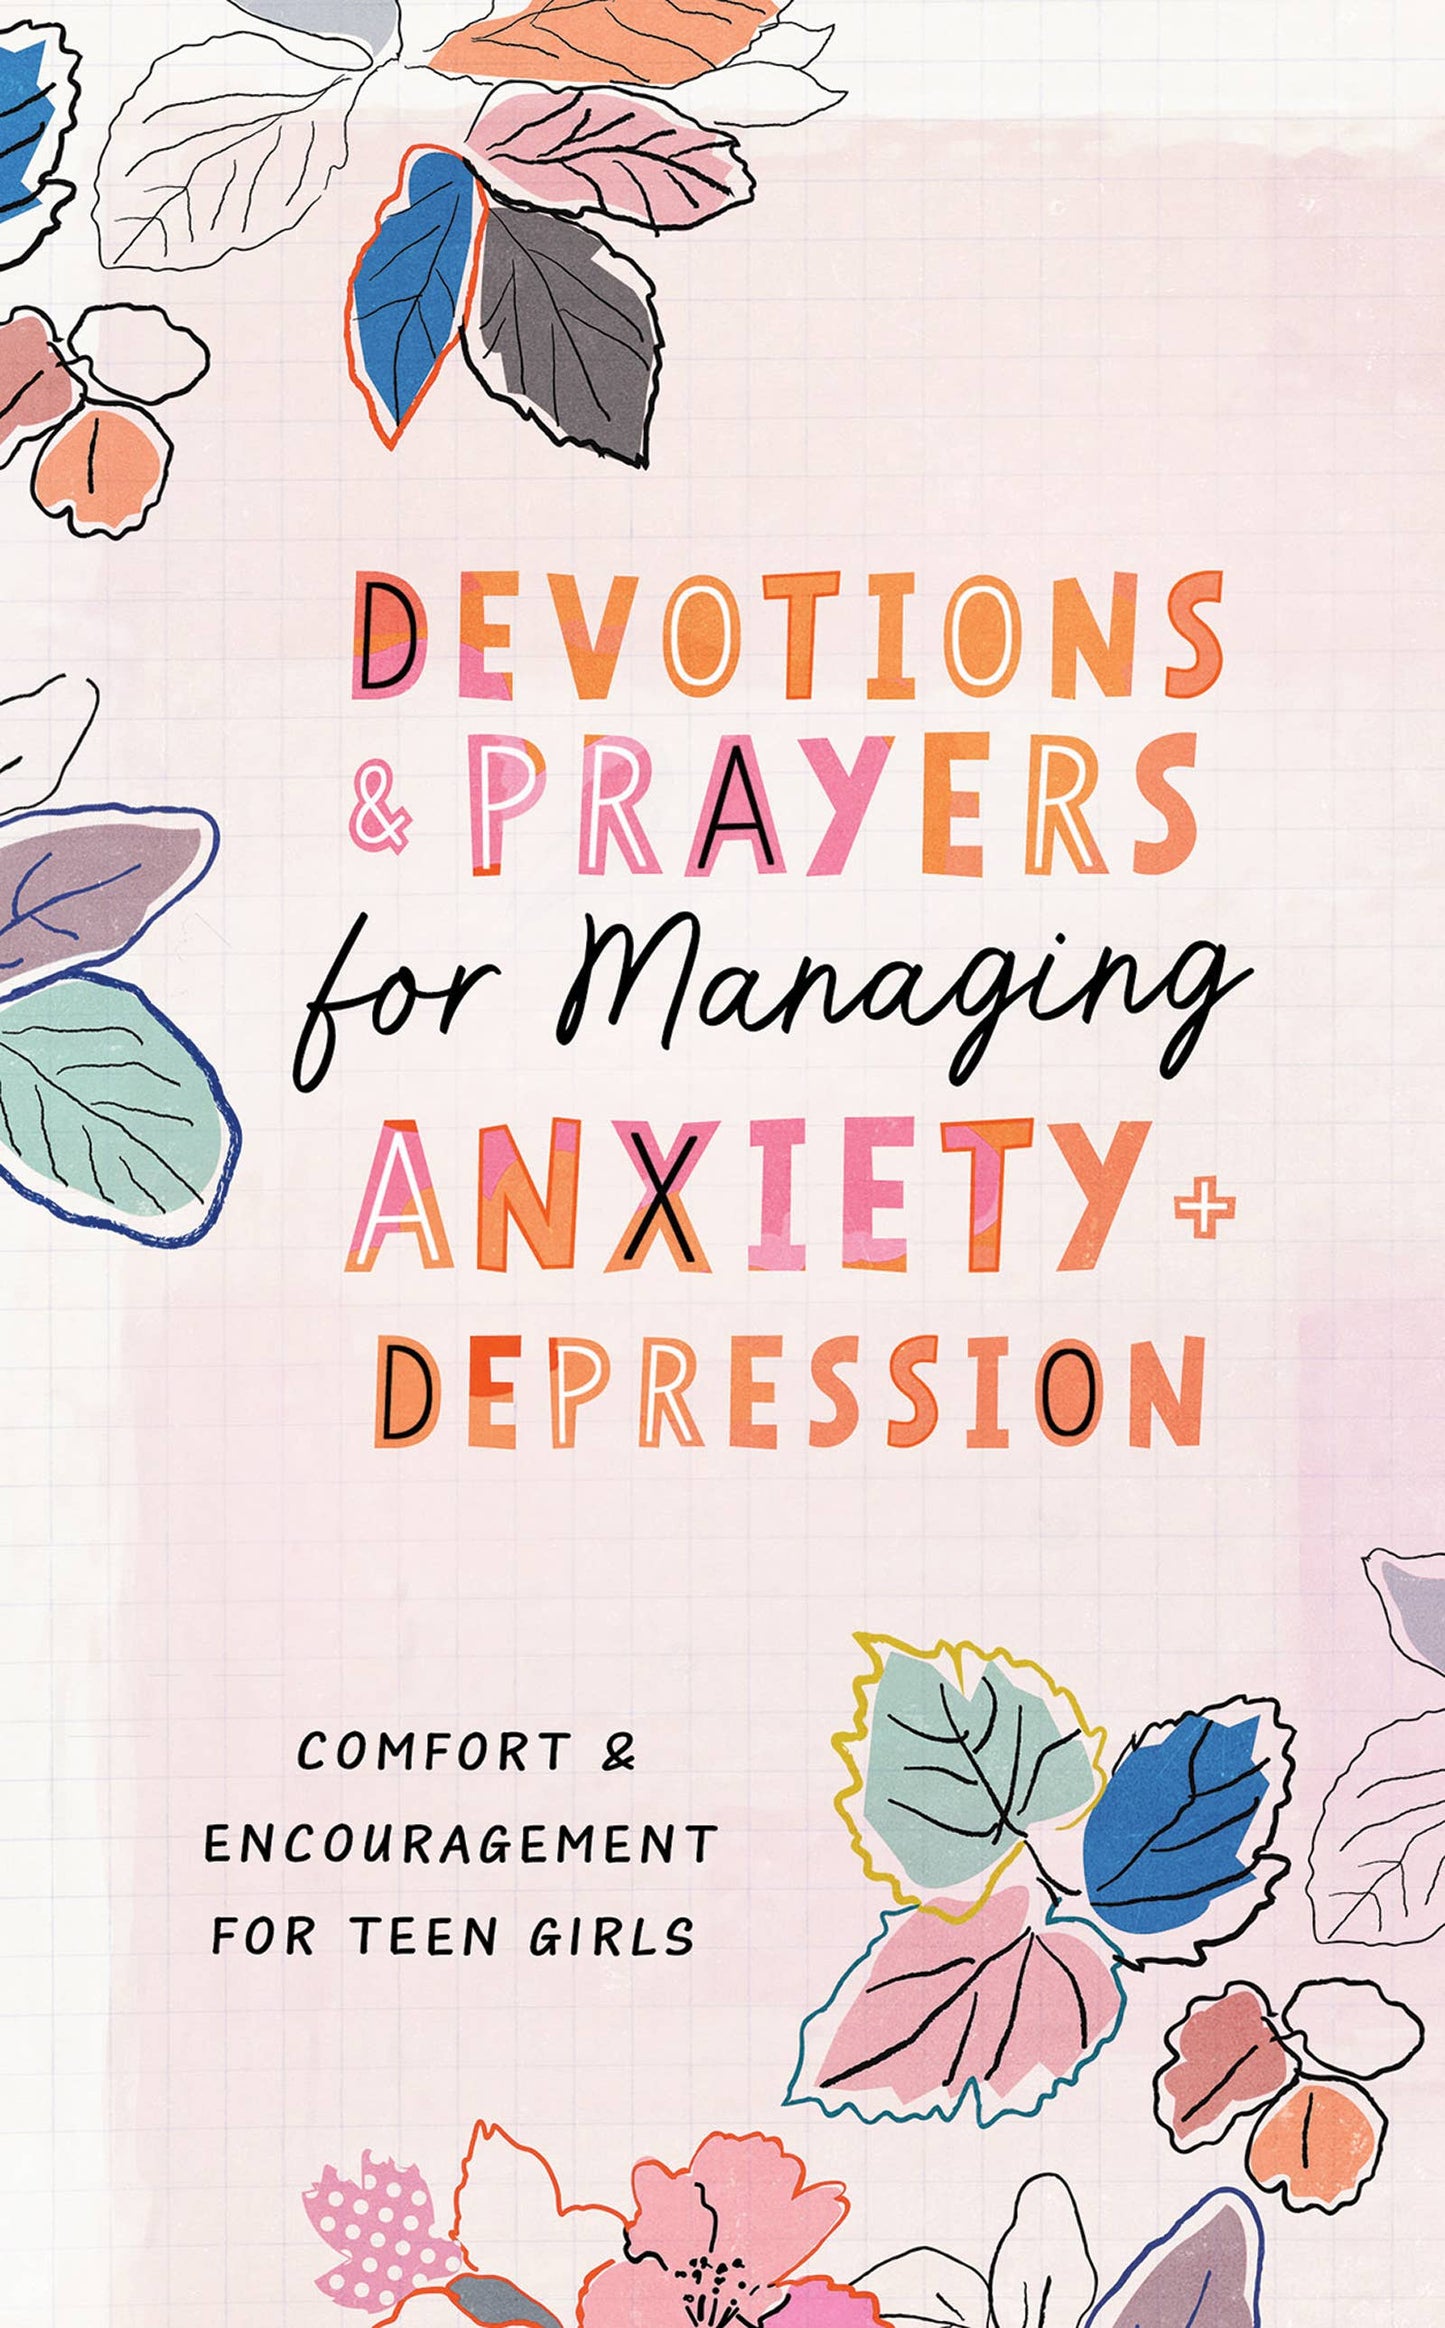 Devotions & Prayers Managing Anxiety & Depression -teen girl